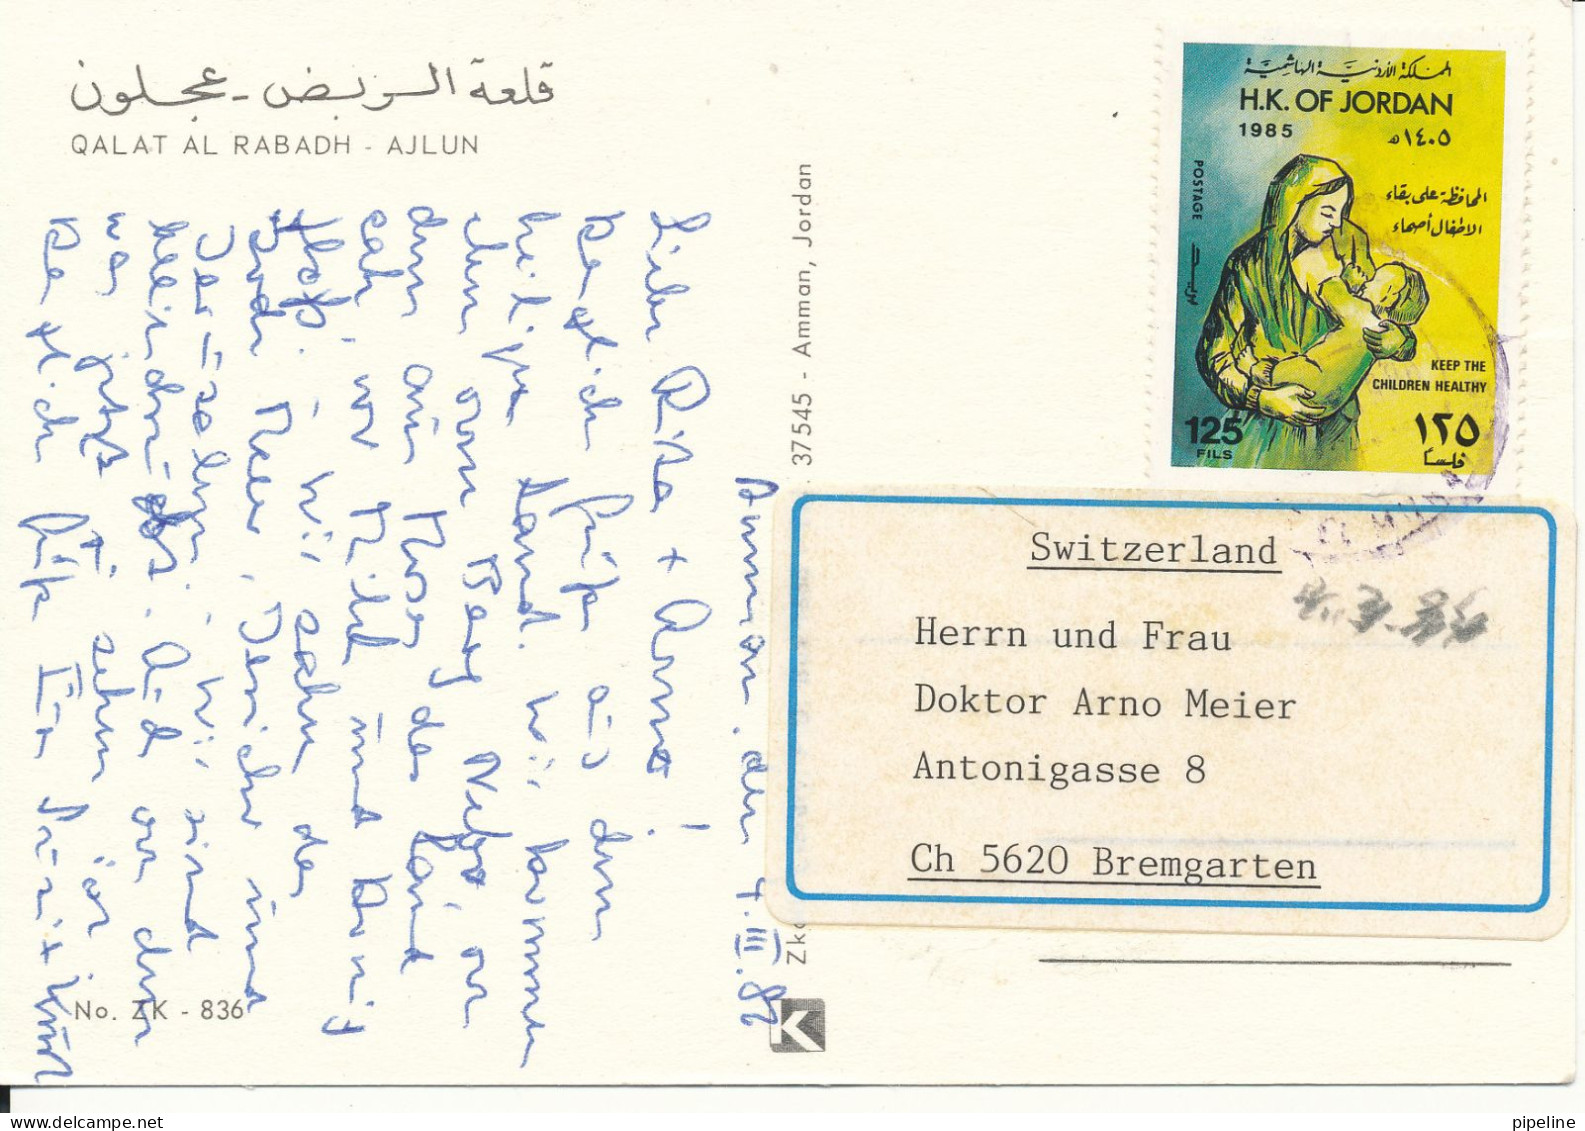 Jordan Postcard Sent To Switzerland 4-3-1986 (Qalat Al Rabadh Ajlun) - Jordania